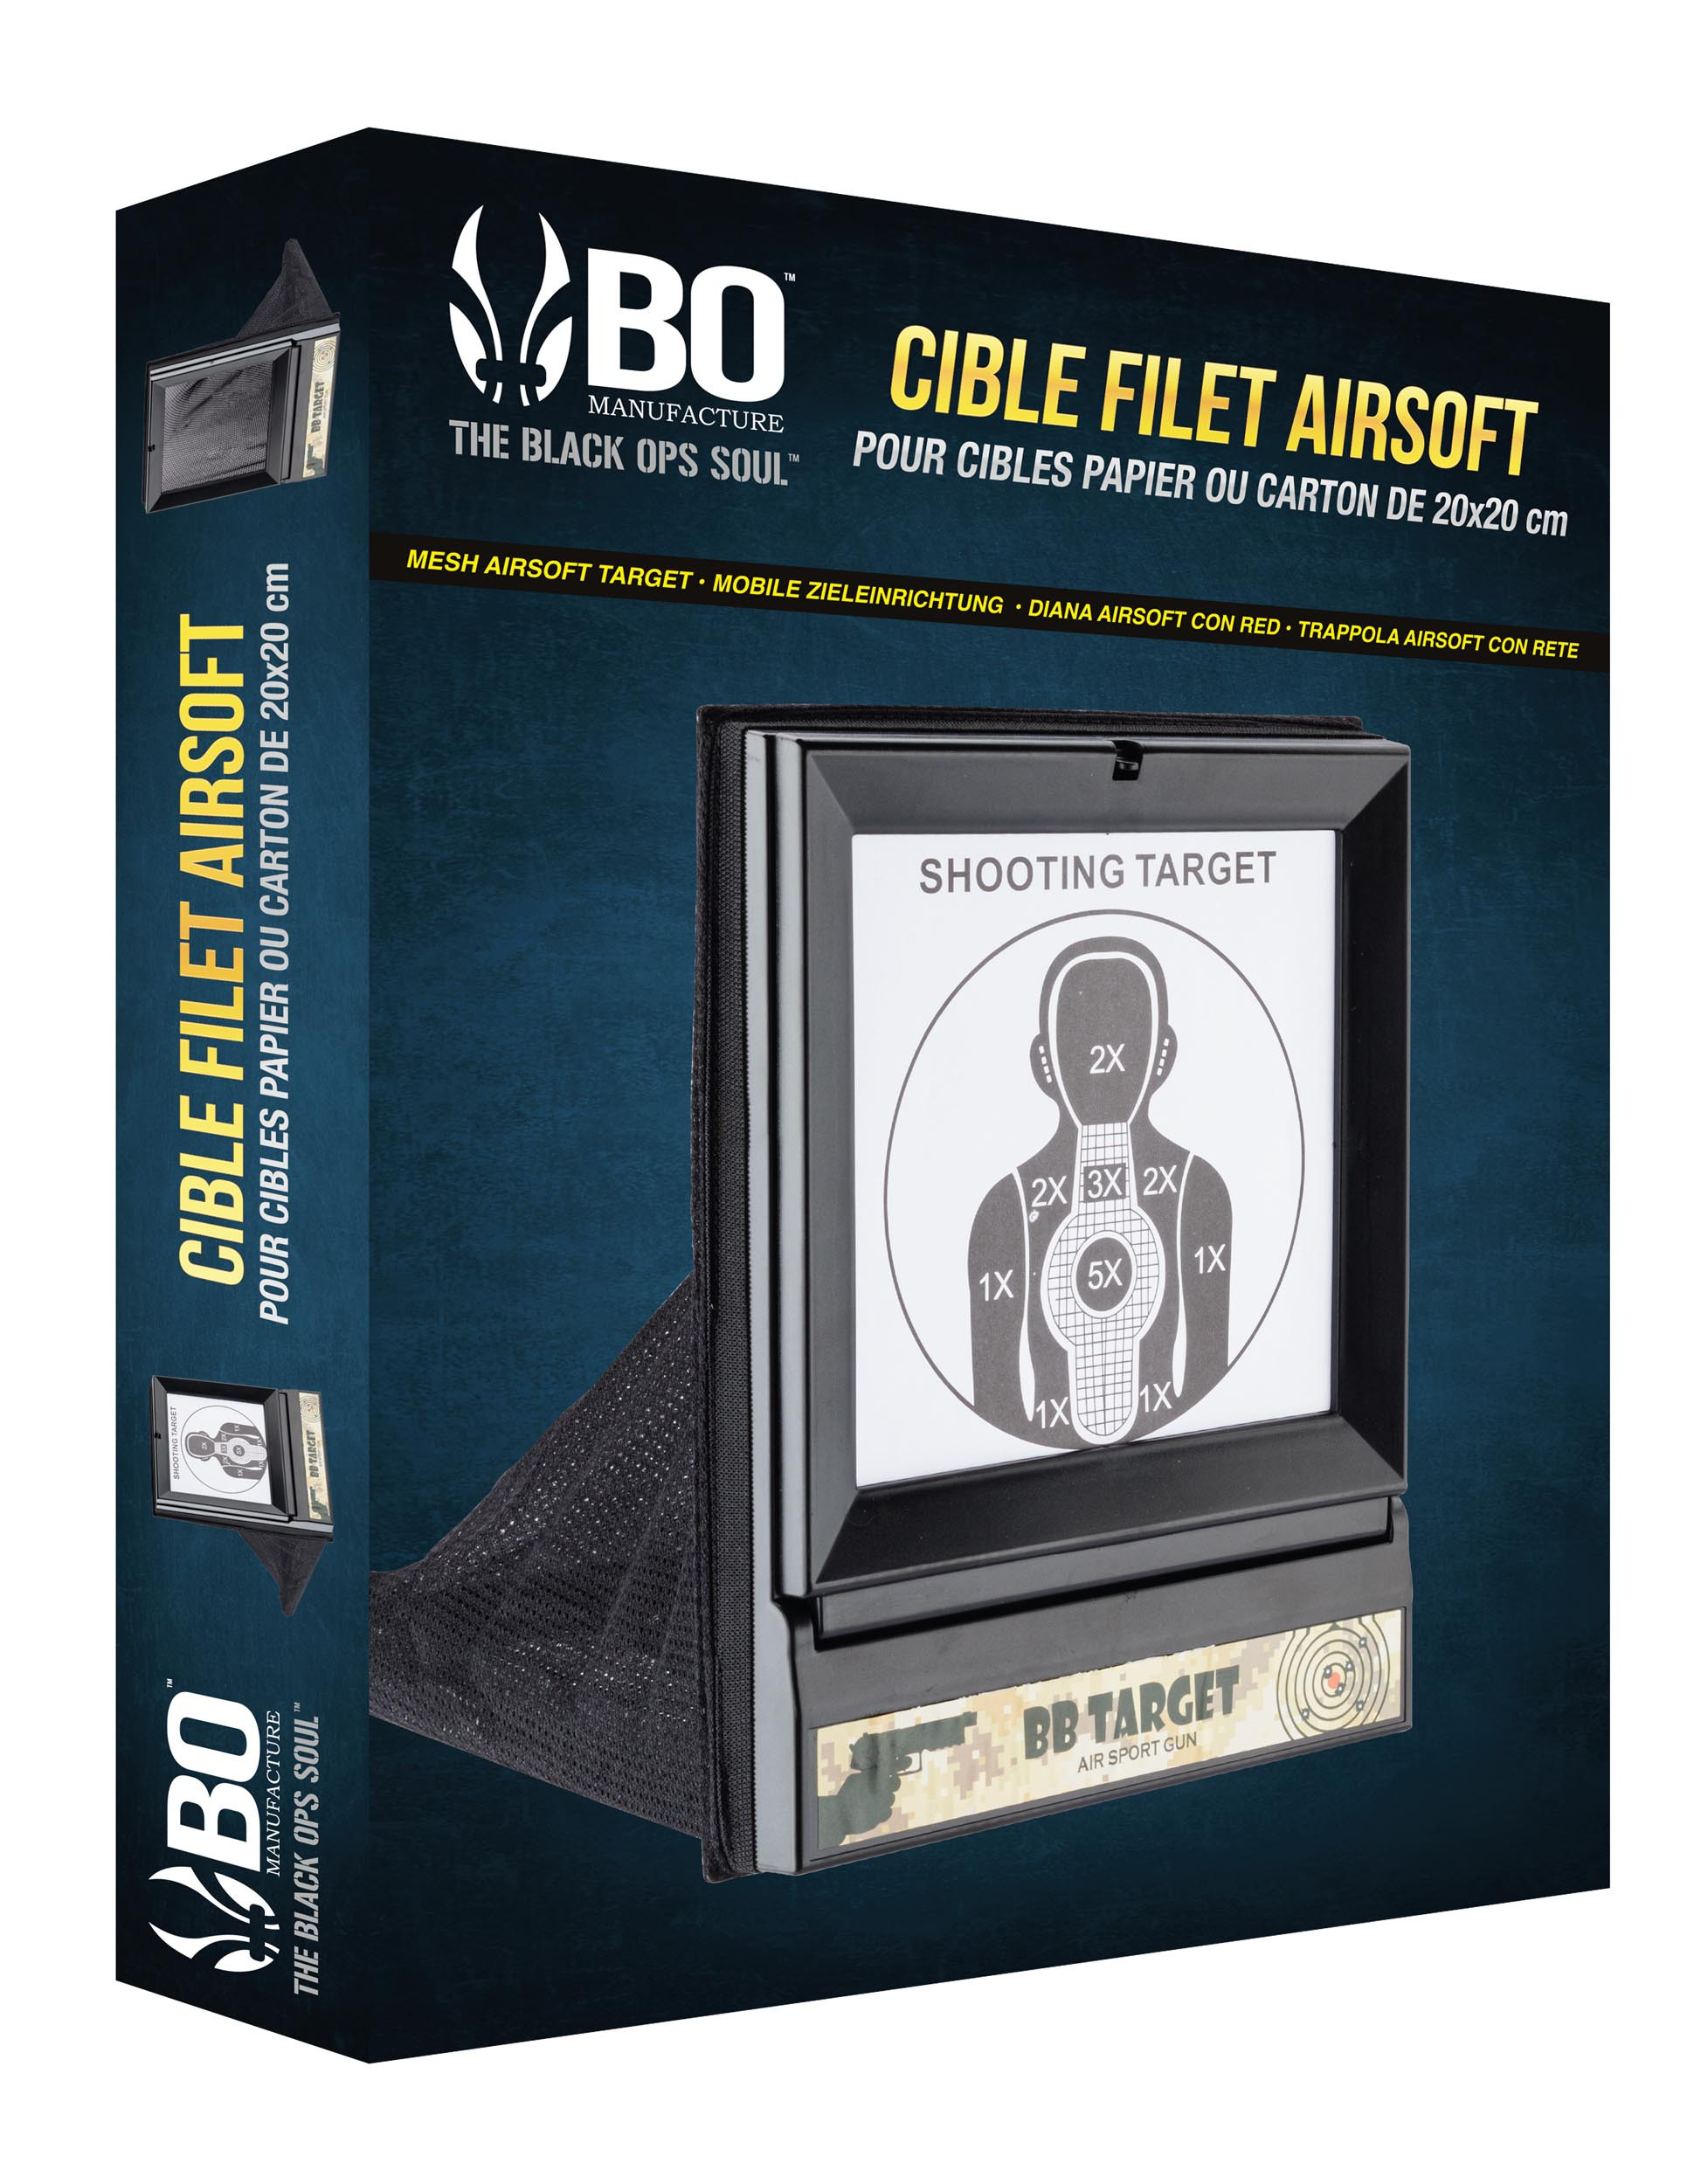 PORTE CIBLE AIRSOFT AVEC FILET - Cibles Airsoft (8451785)